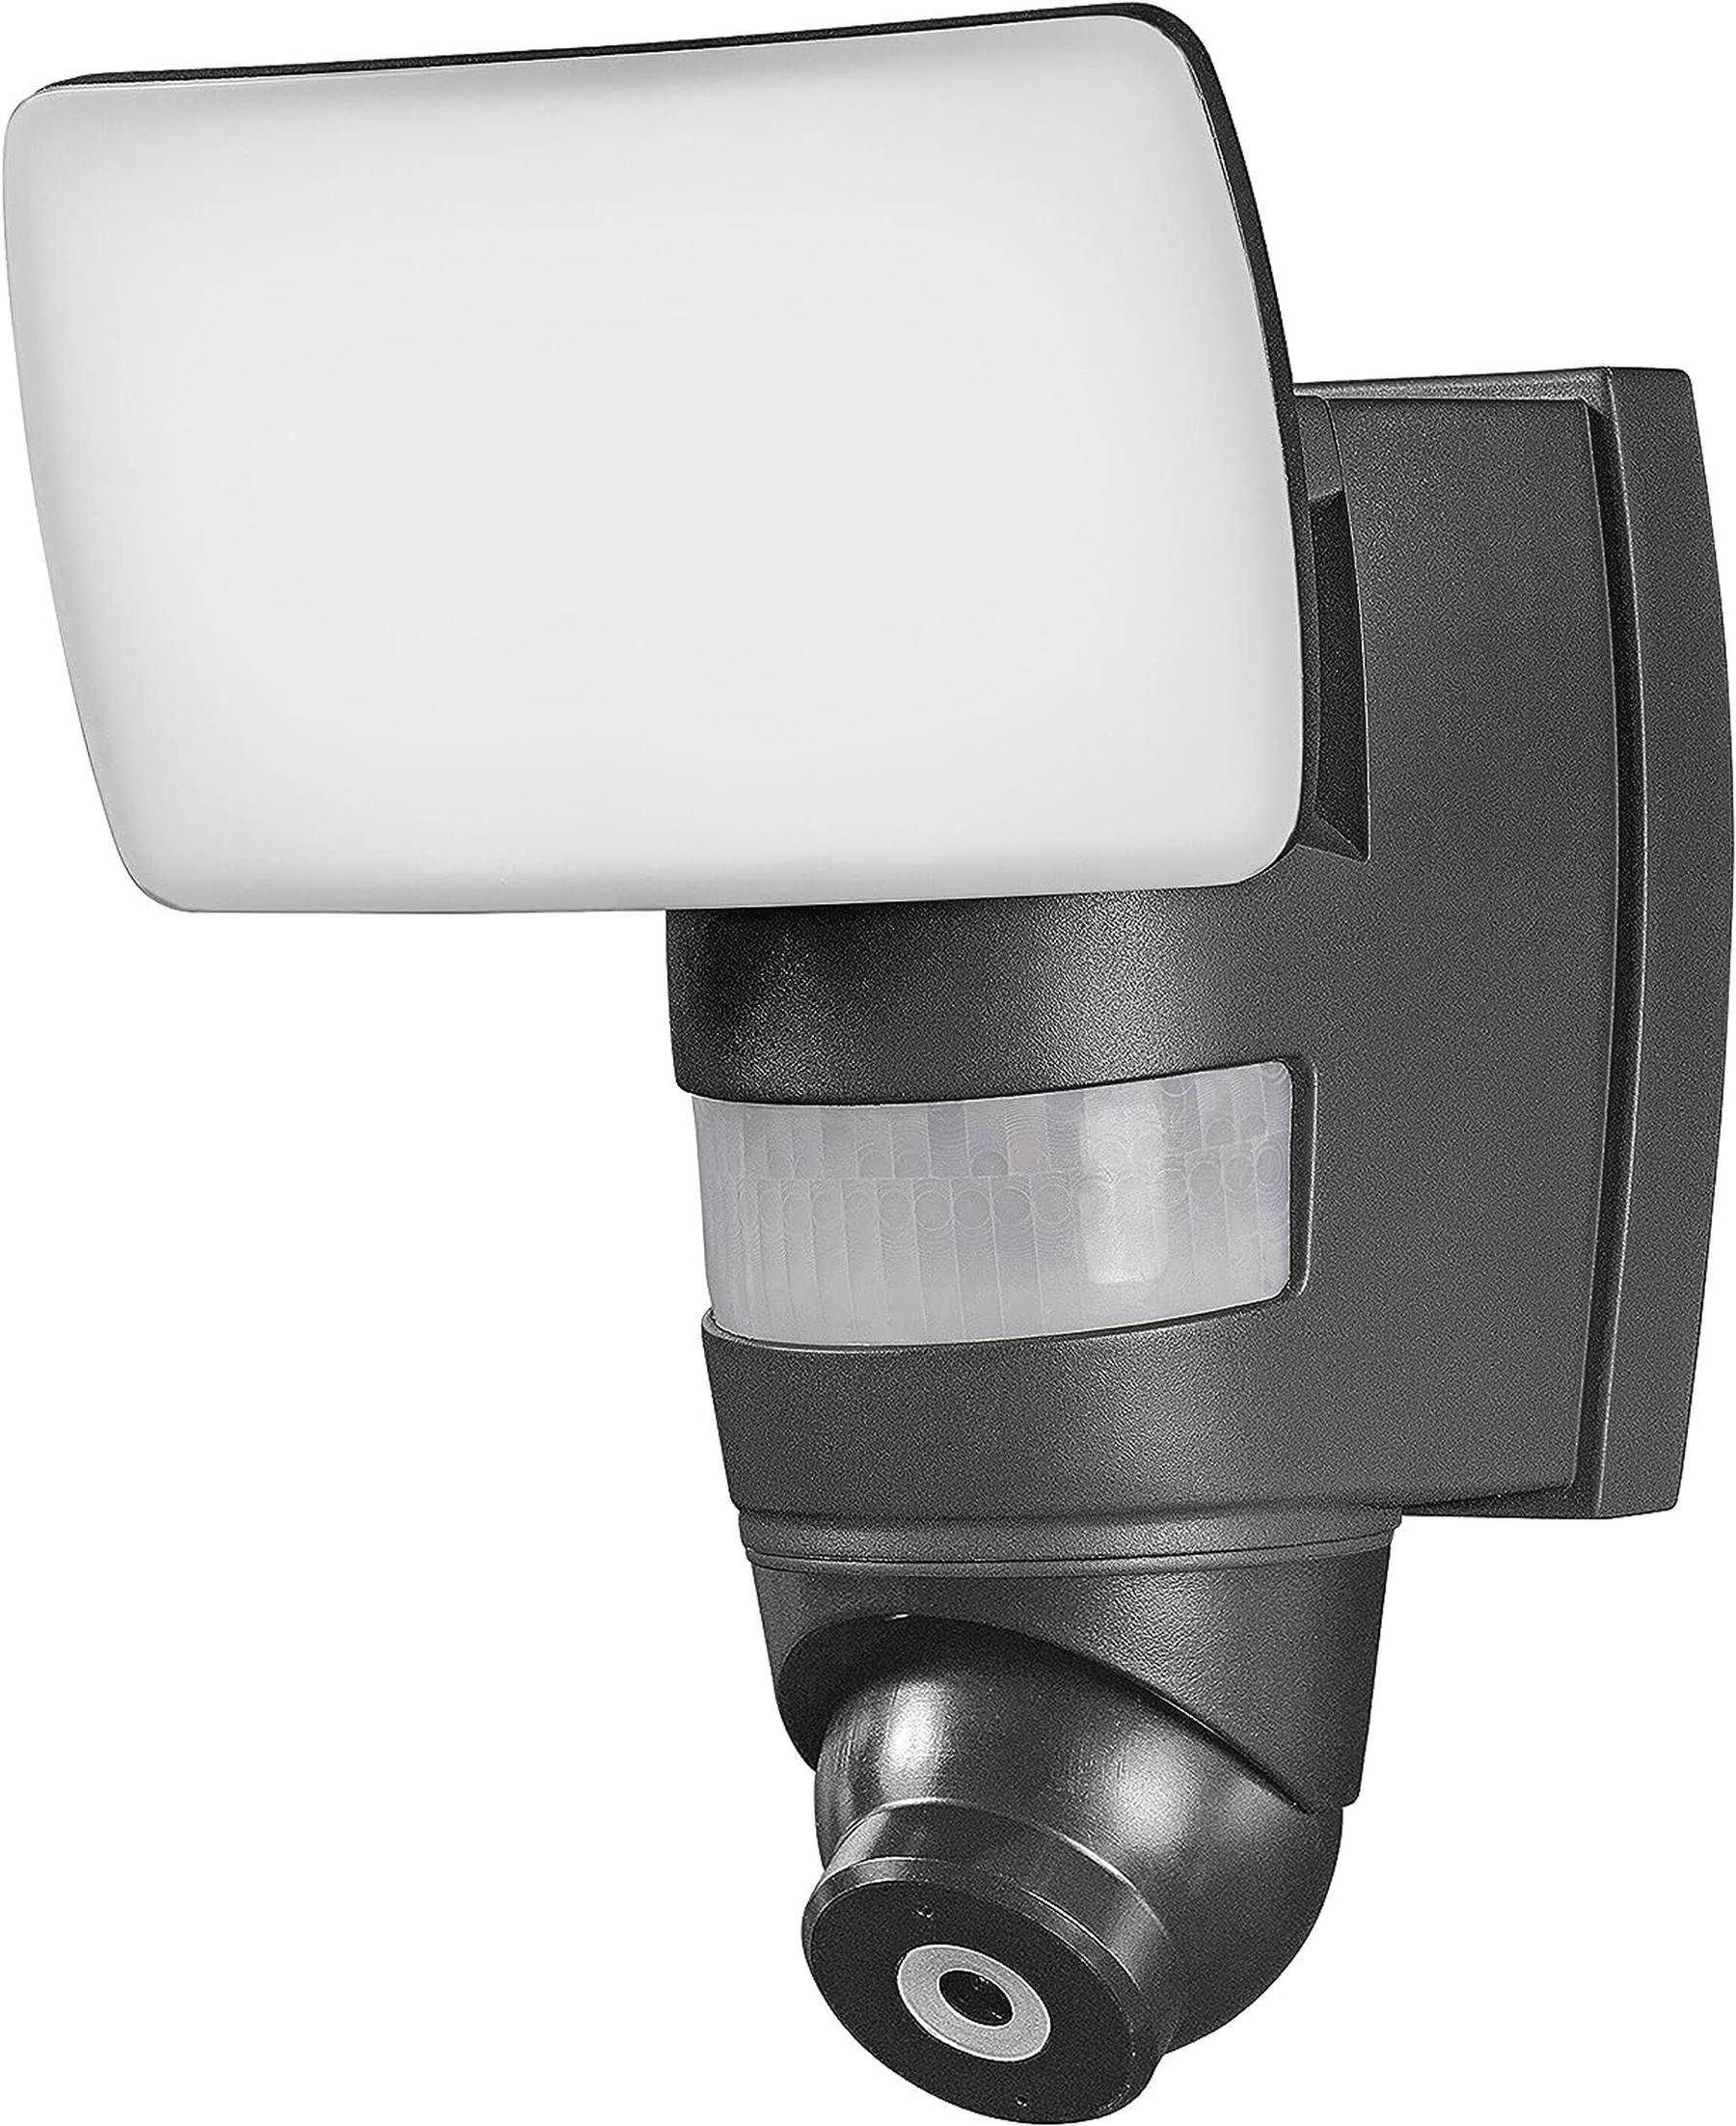 integrierter dimmbar Flutstra, Ledvance Security LEDVANCE Tageslichtlampe mit Smarte warmweiss, Kamera, LED Leuchte